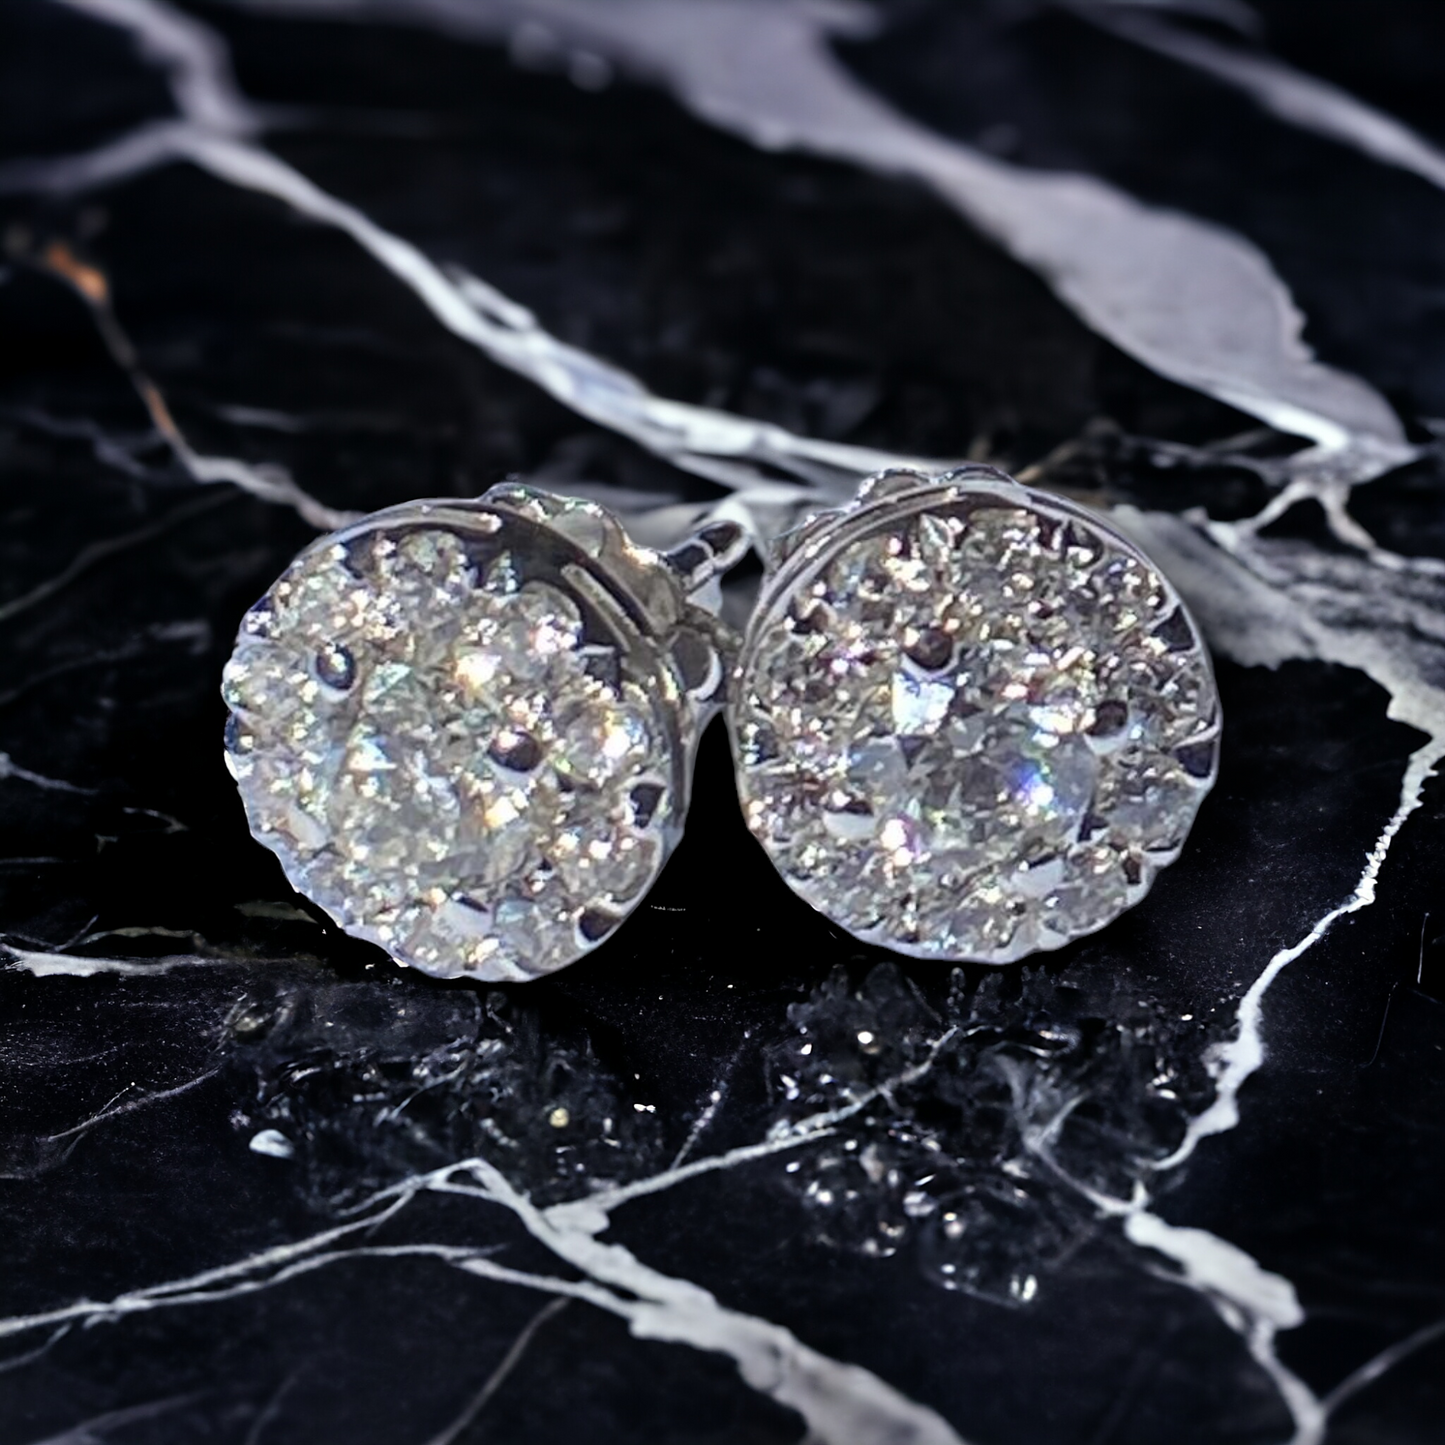 Handmade 18K white gold earrings with 1.31 ct. Vs quality natural Diamonds, IGI certificates.